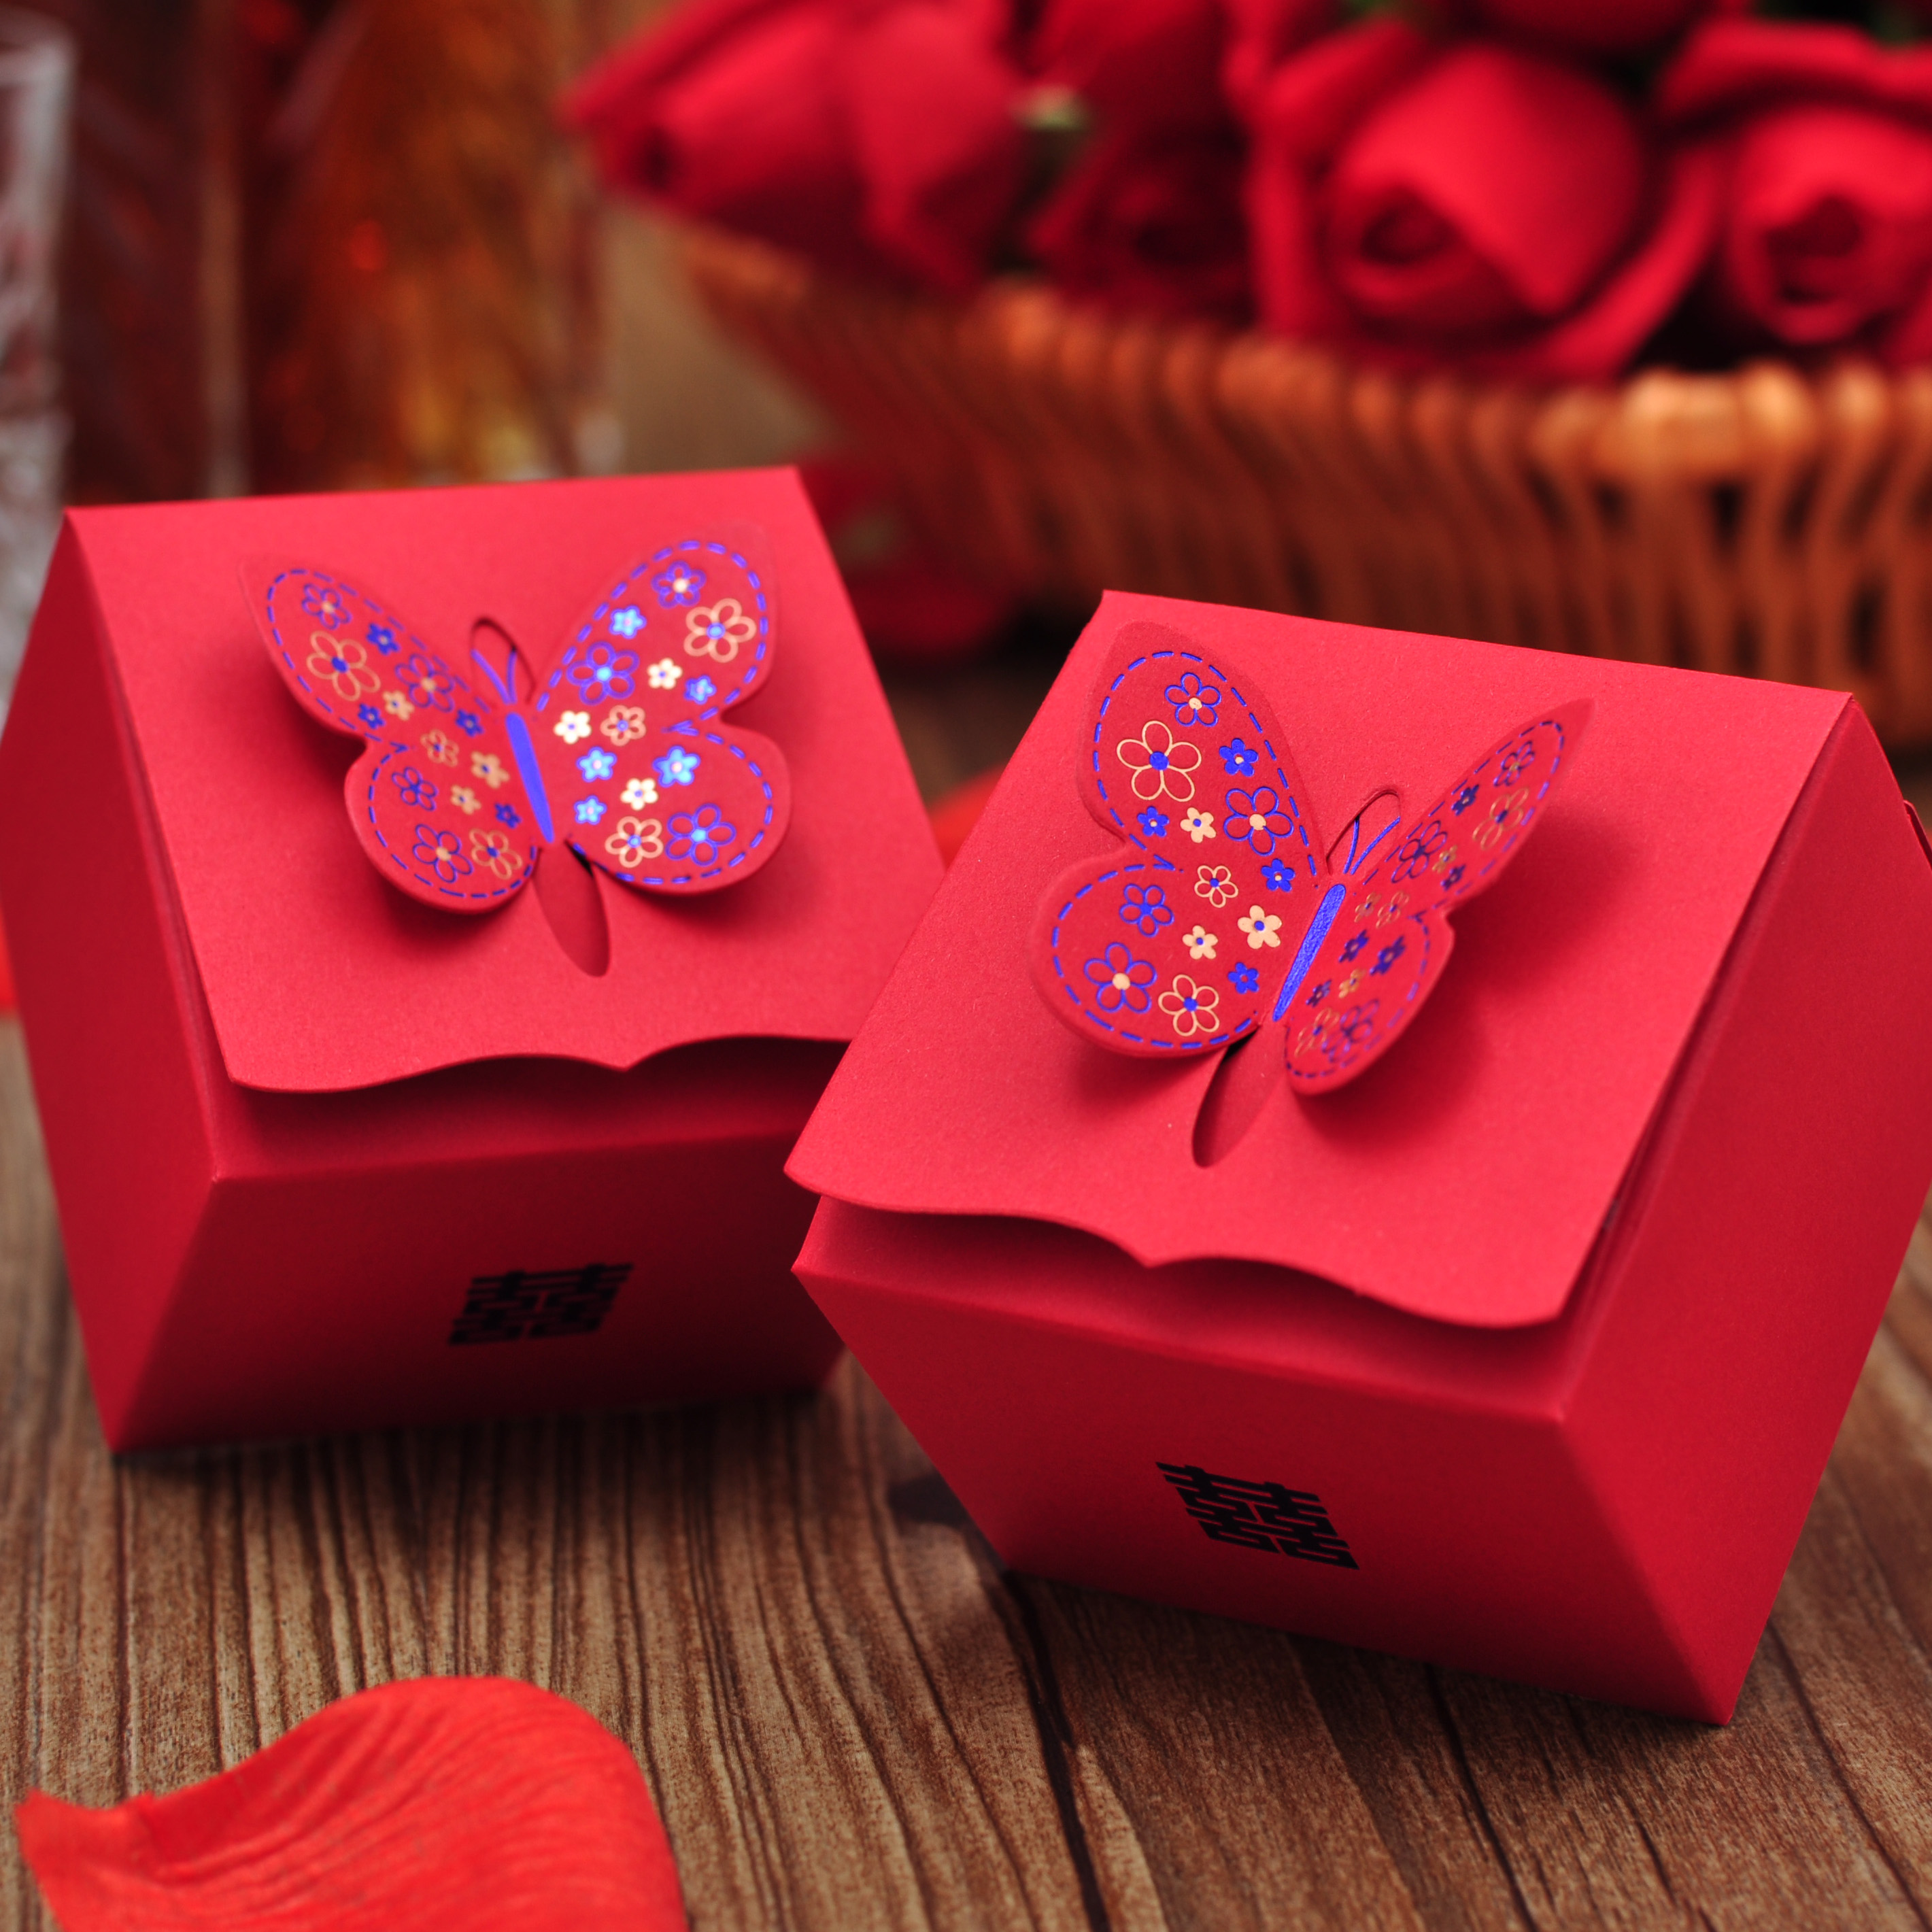 Vinyluse 婚庆结婚成品喜糖盒子糖果盒创意蝴蝶红卡纸盒喜糖包装折扣优惠信息